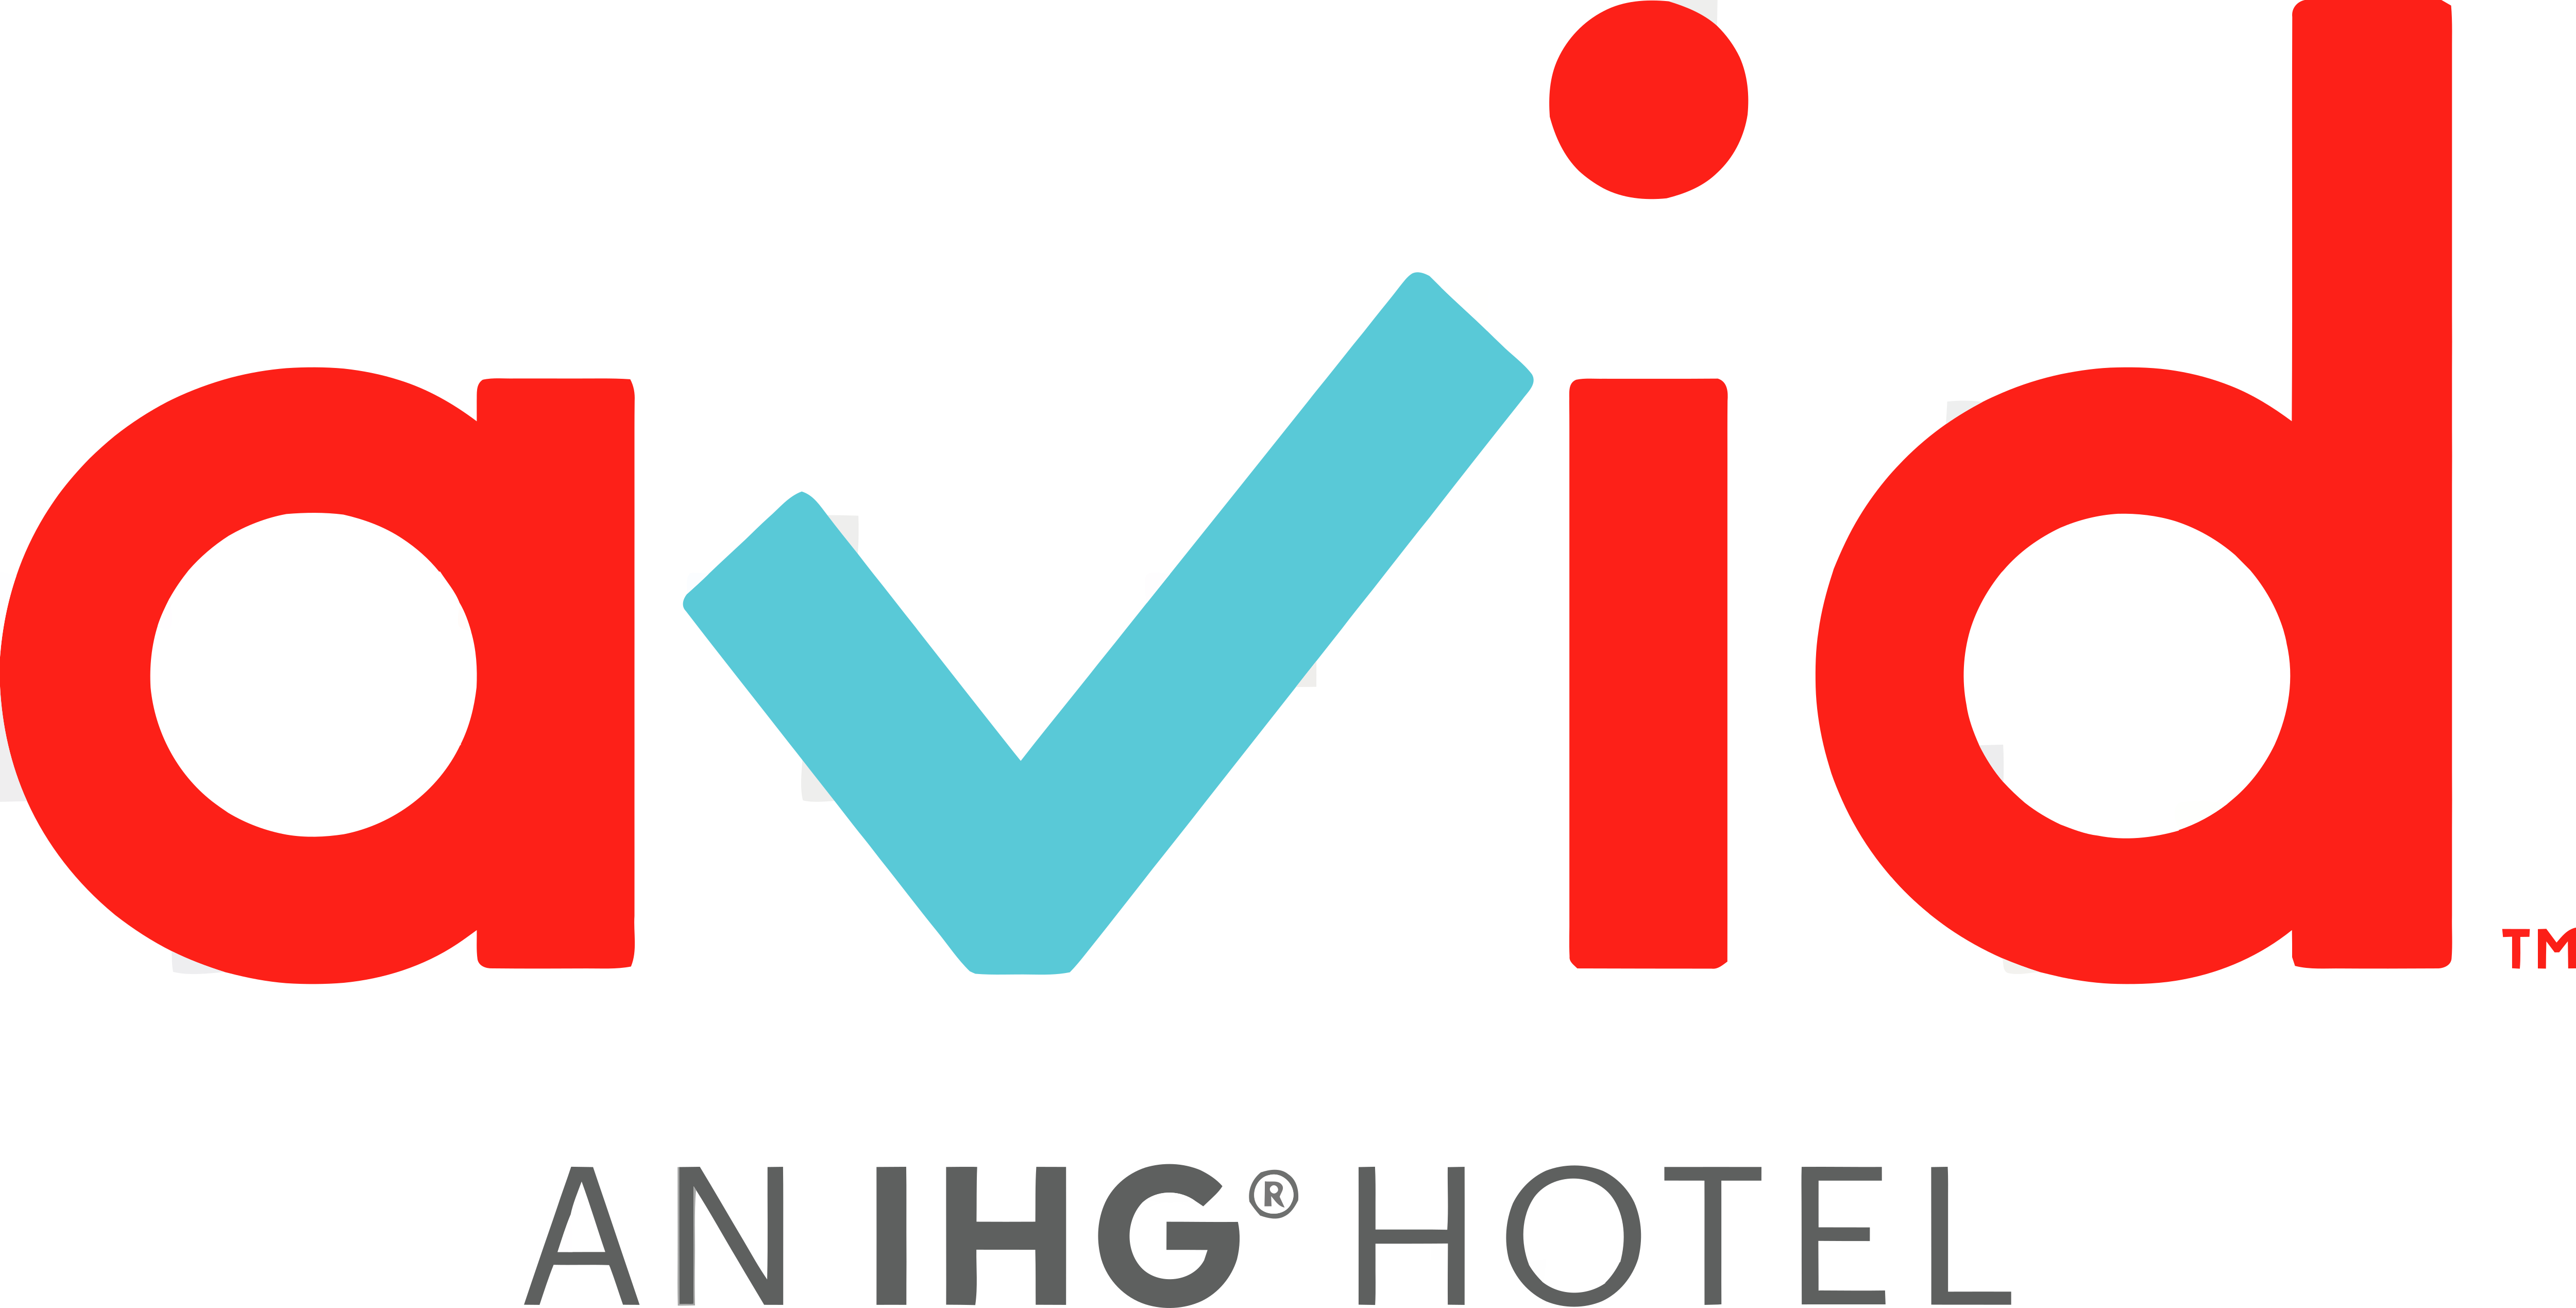 Avid Hotels